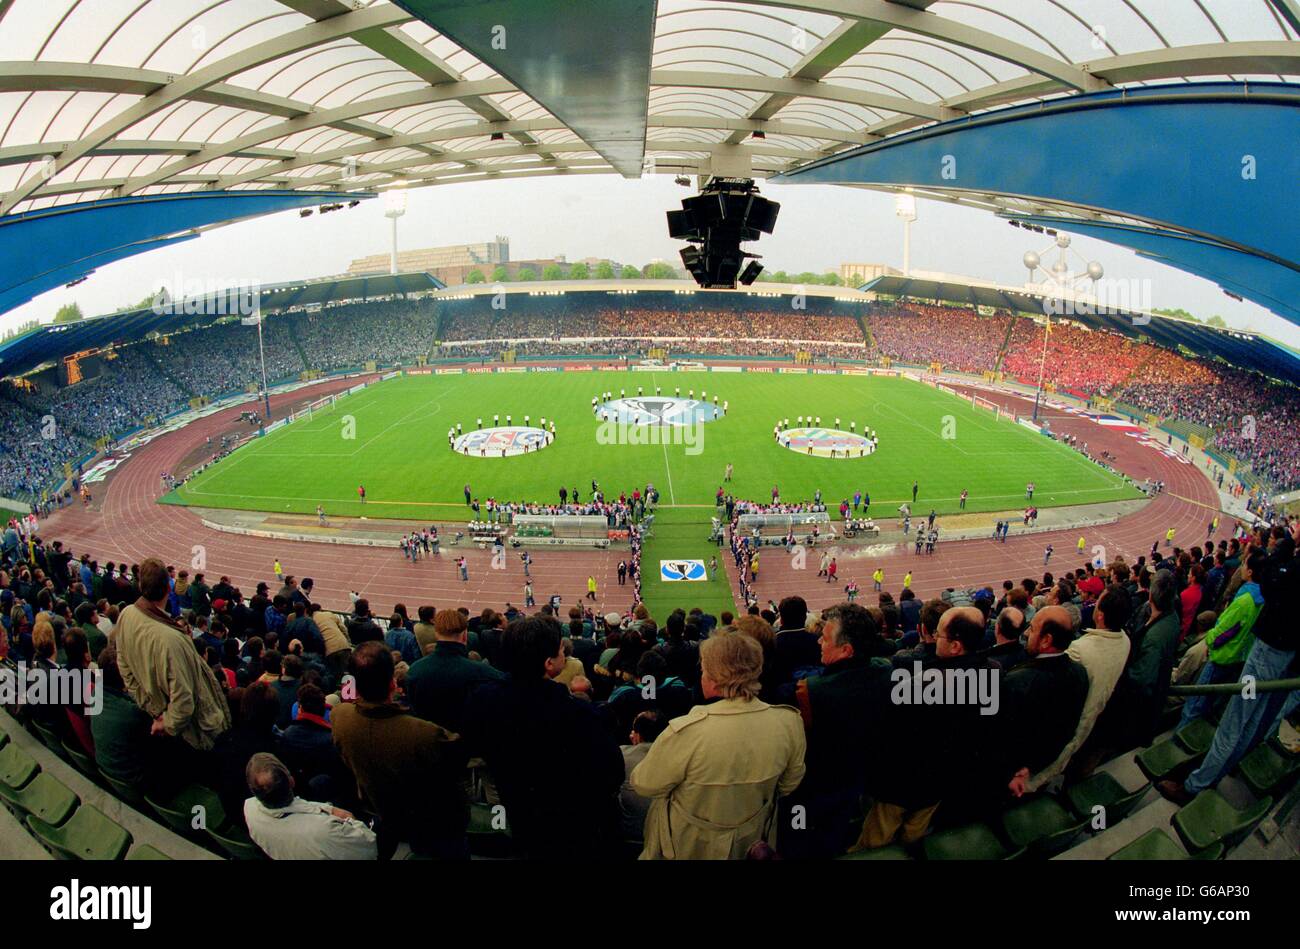 UEFA 1996 EUROPEAN CUP GEWINNER POKALFINALE - PARIS ST GERMAIN gegen RAPID WIEN. Zeremonie - Stadion - la stade roi Baudouin Stockfoto